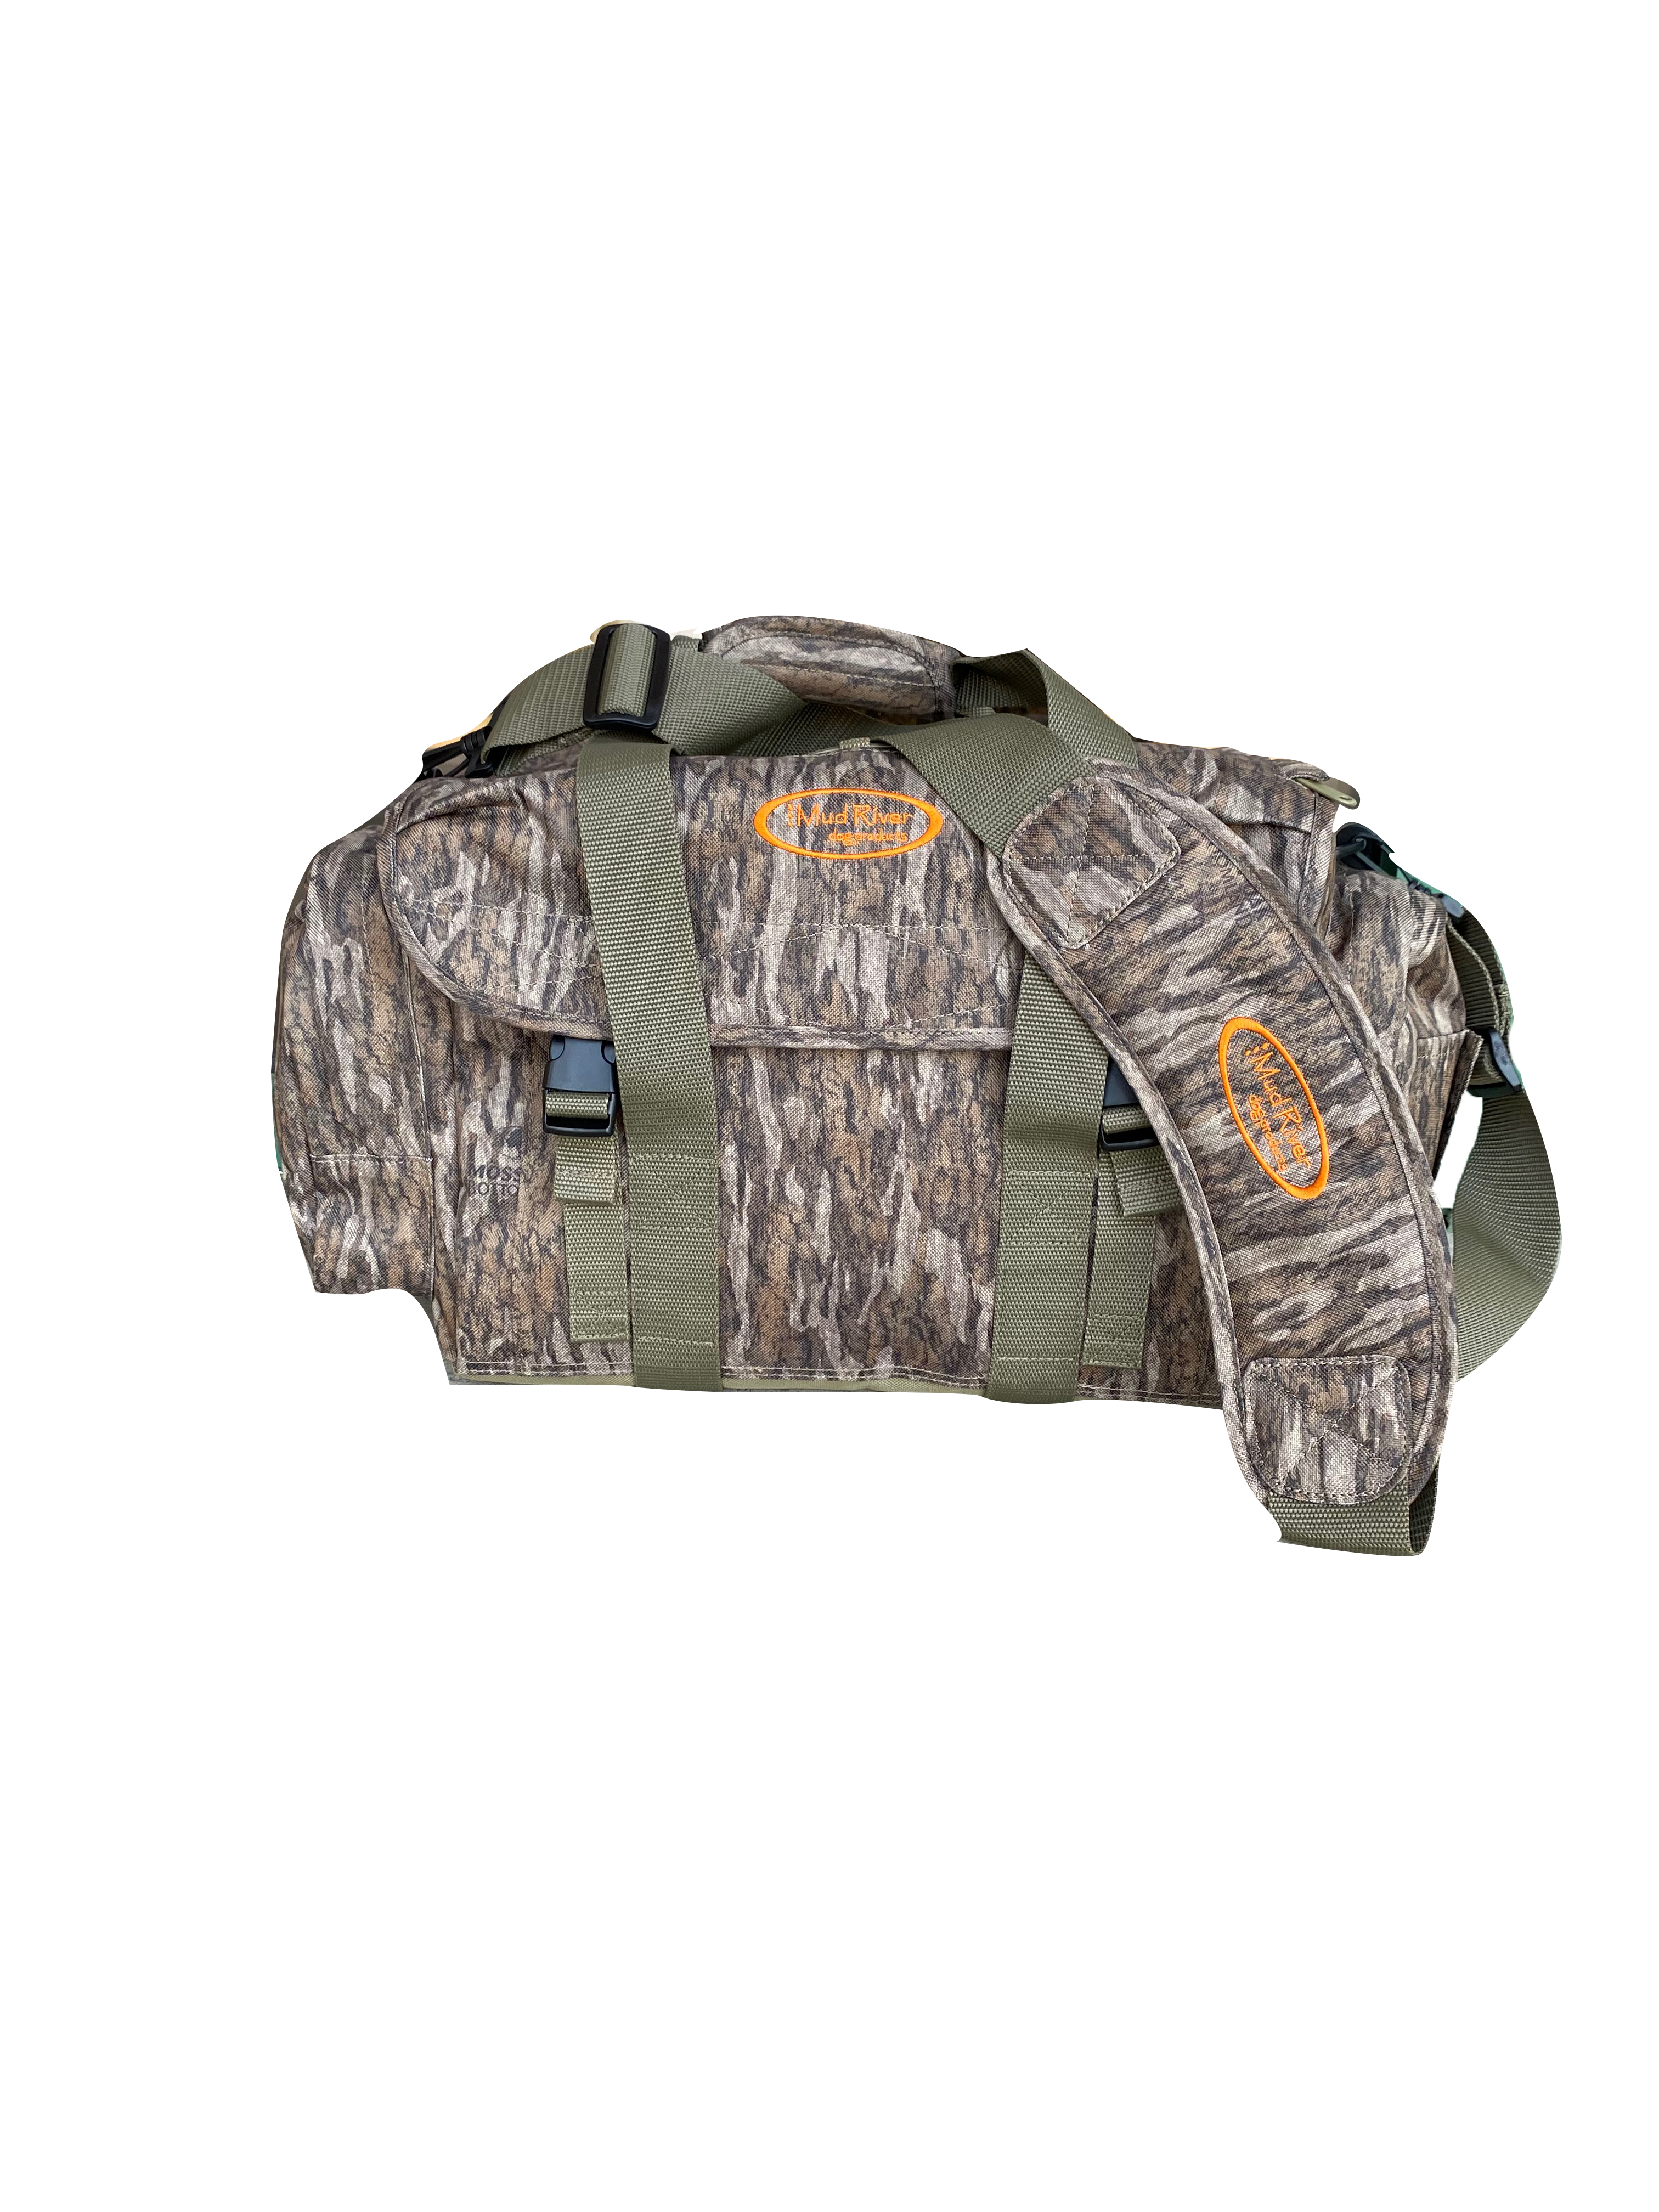 Ducks Unlimited /Mud River Dog Handler Bag – Boyt Harness